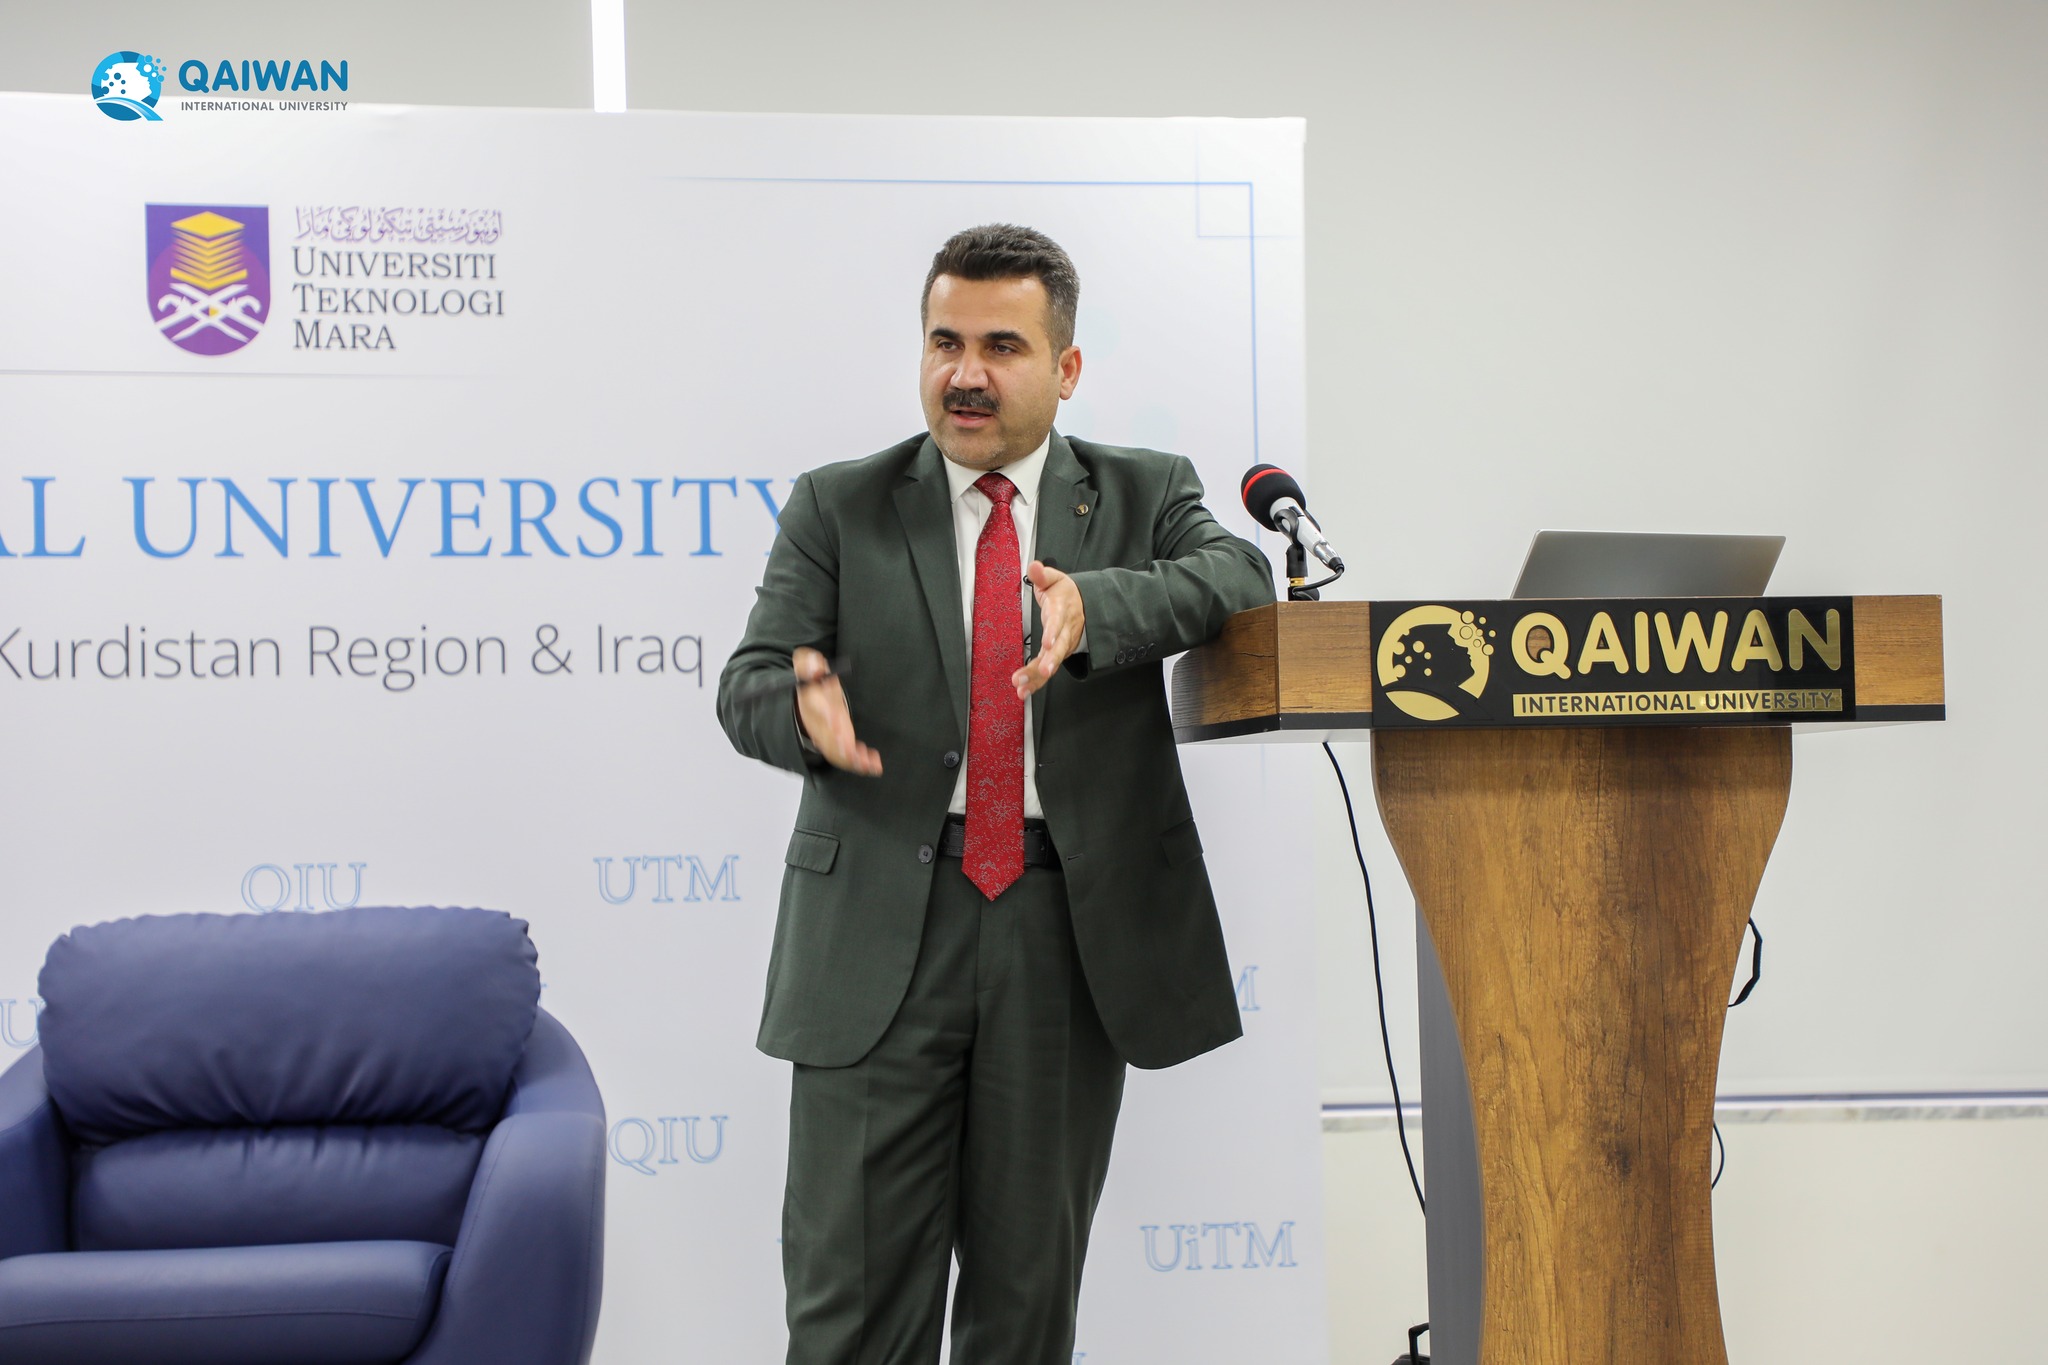 Seminar organized by the Entrepreneurship Club of QIU, featured Dr. Bakhtiar Talabani providing a comprehensive discourse on the university phase